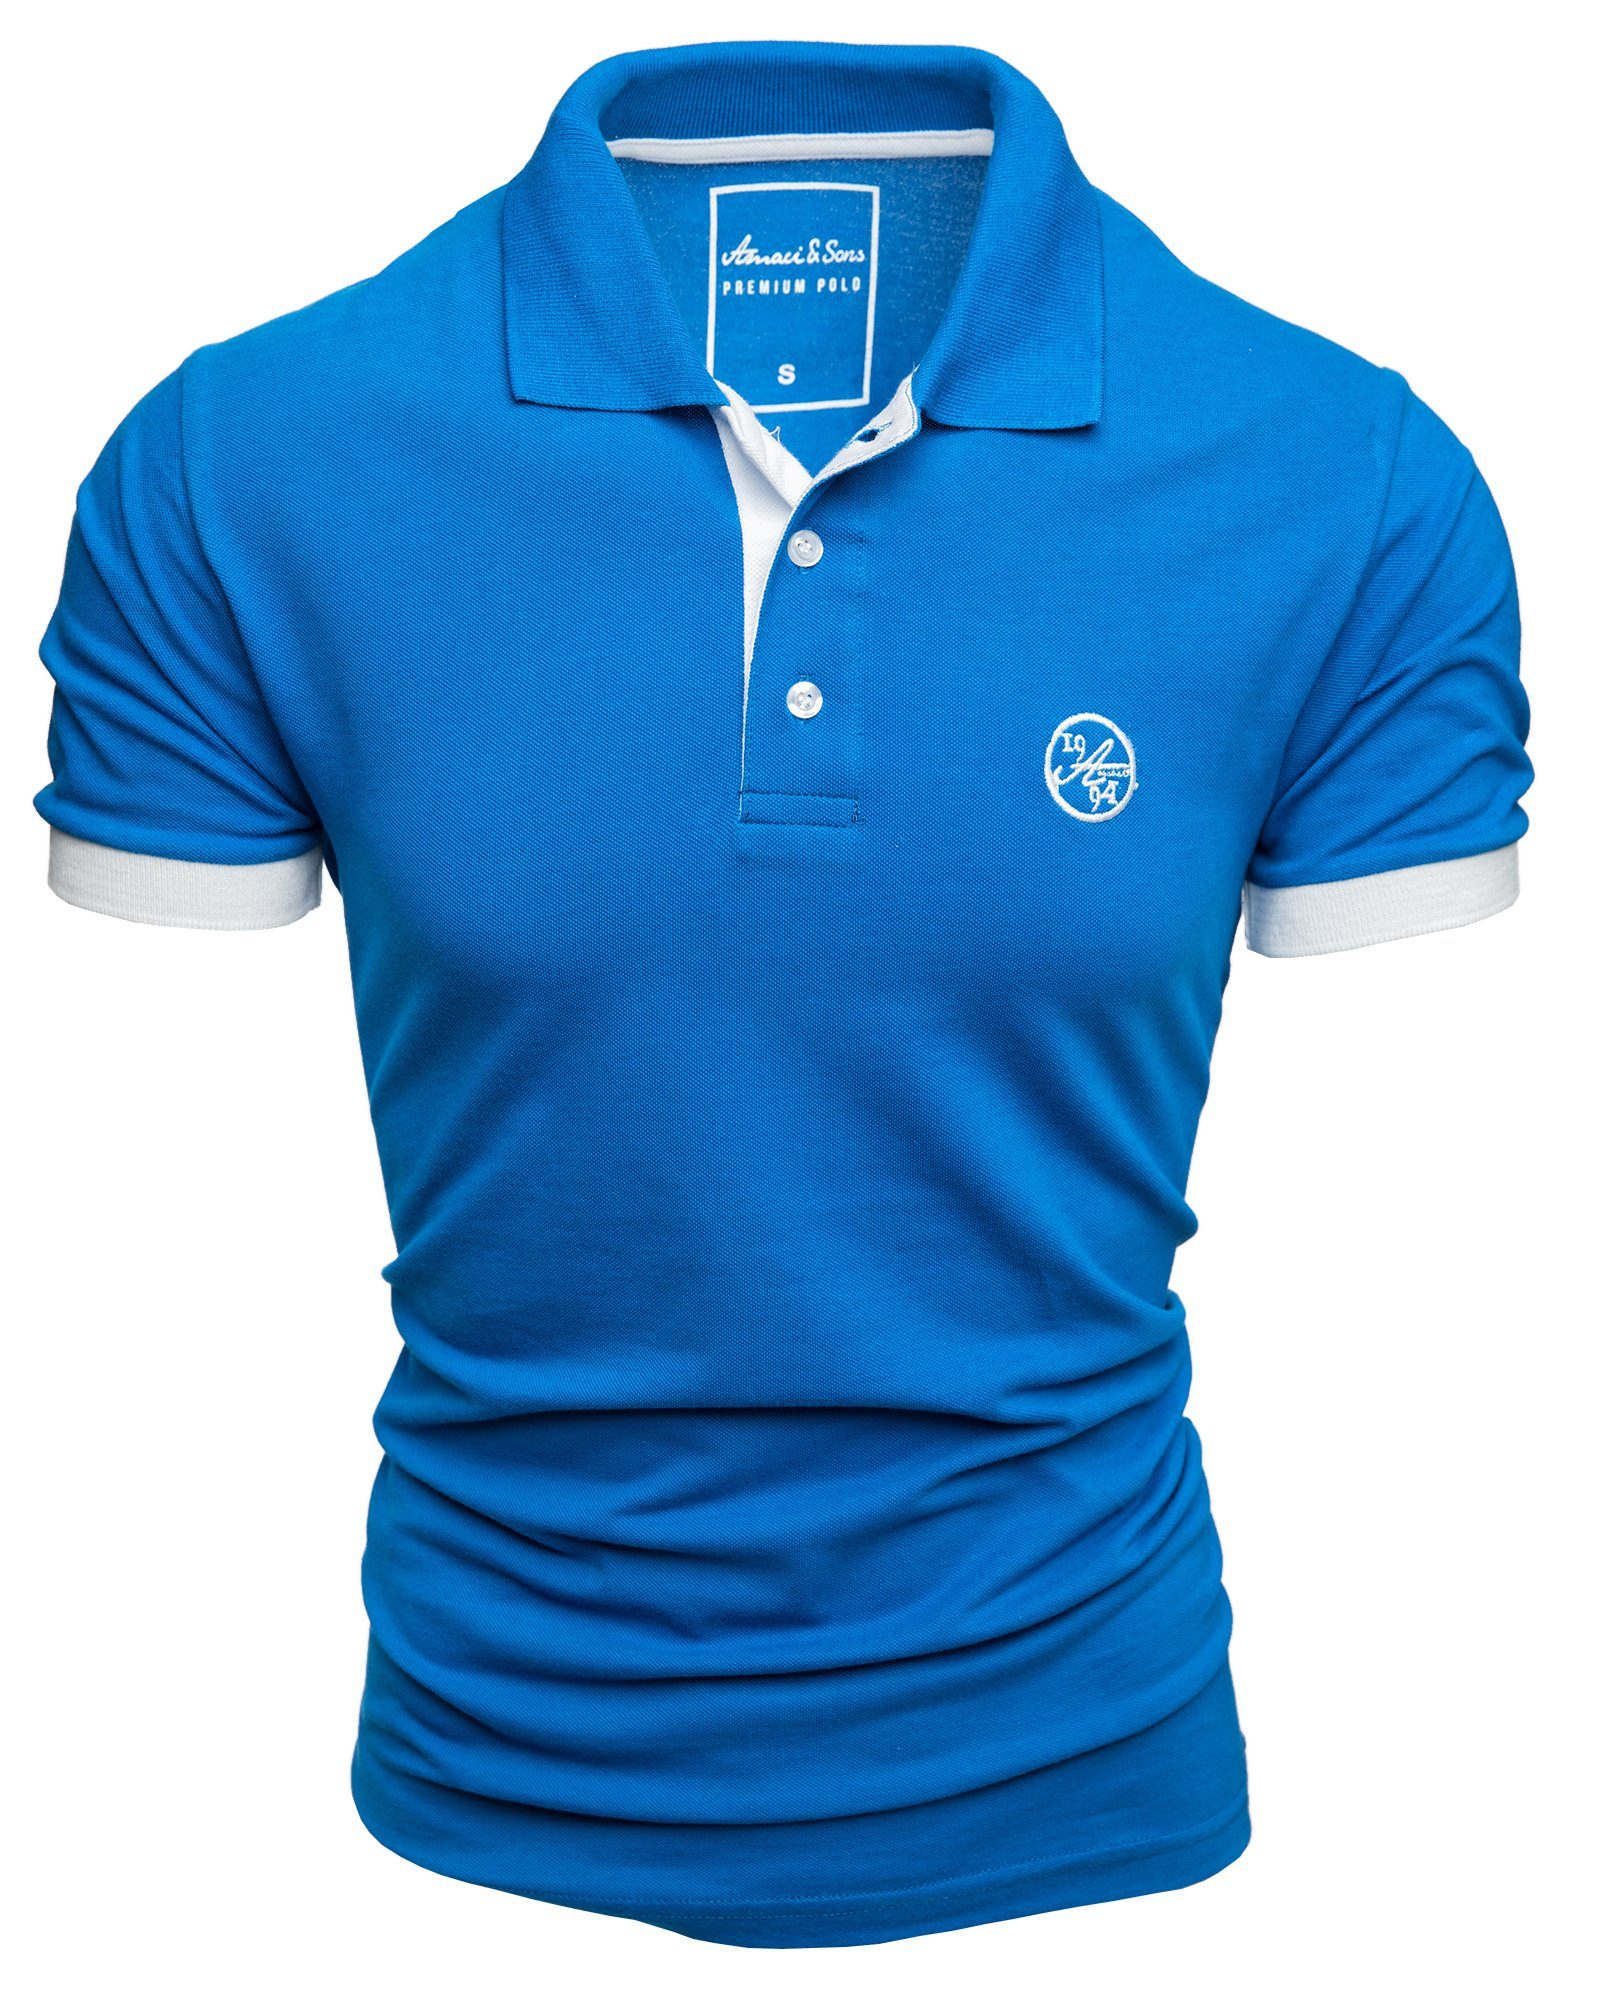 Amaci&Sons Poloshirt MEMPHIS Basic Polo Shirt Royalblau/Weiß Kontrast